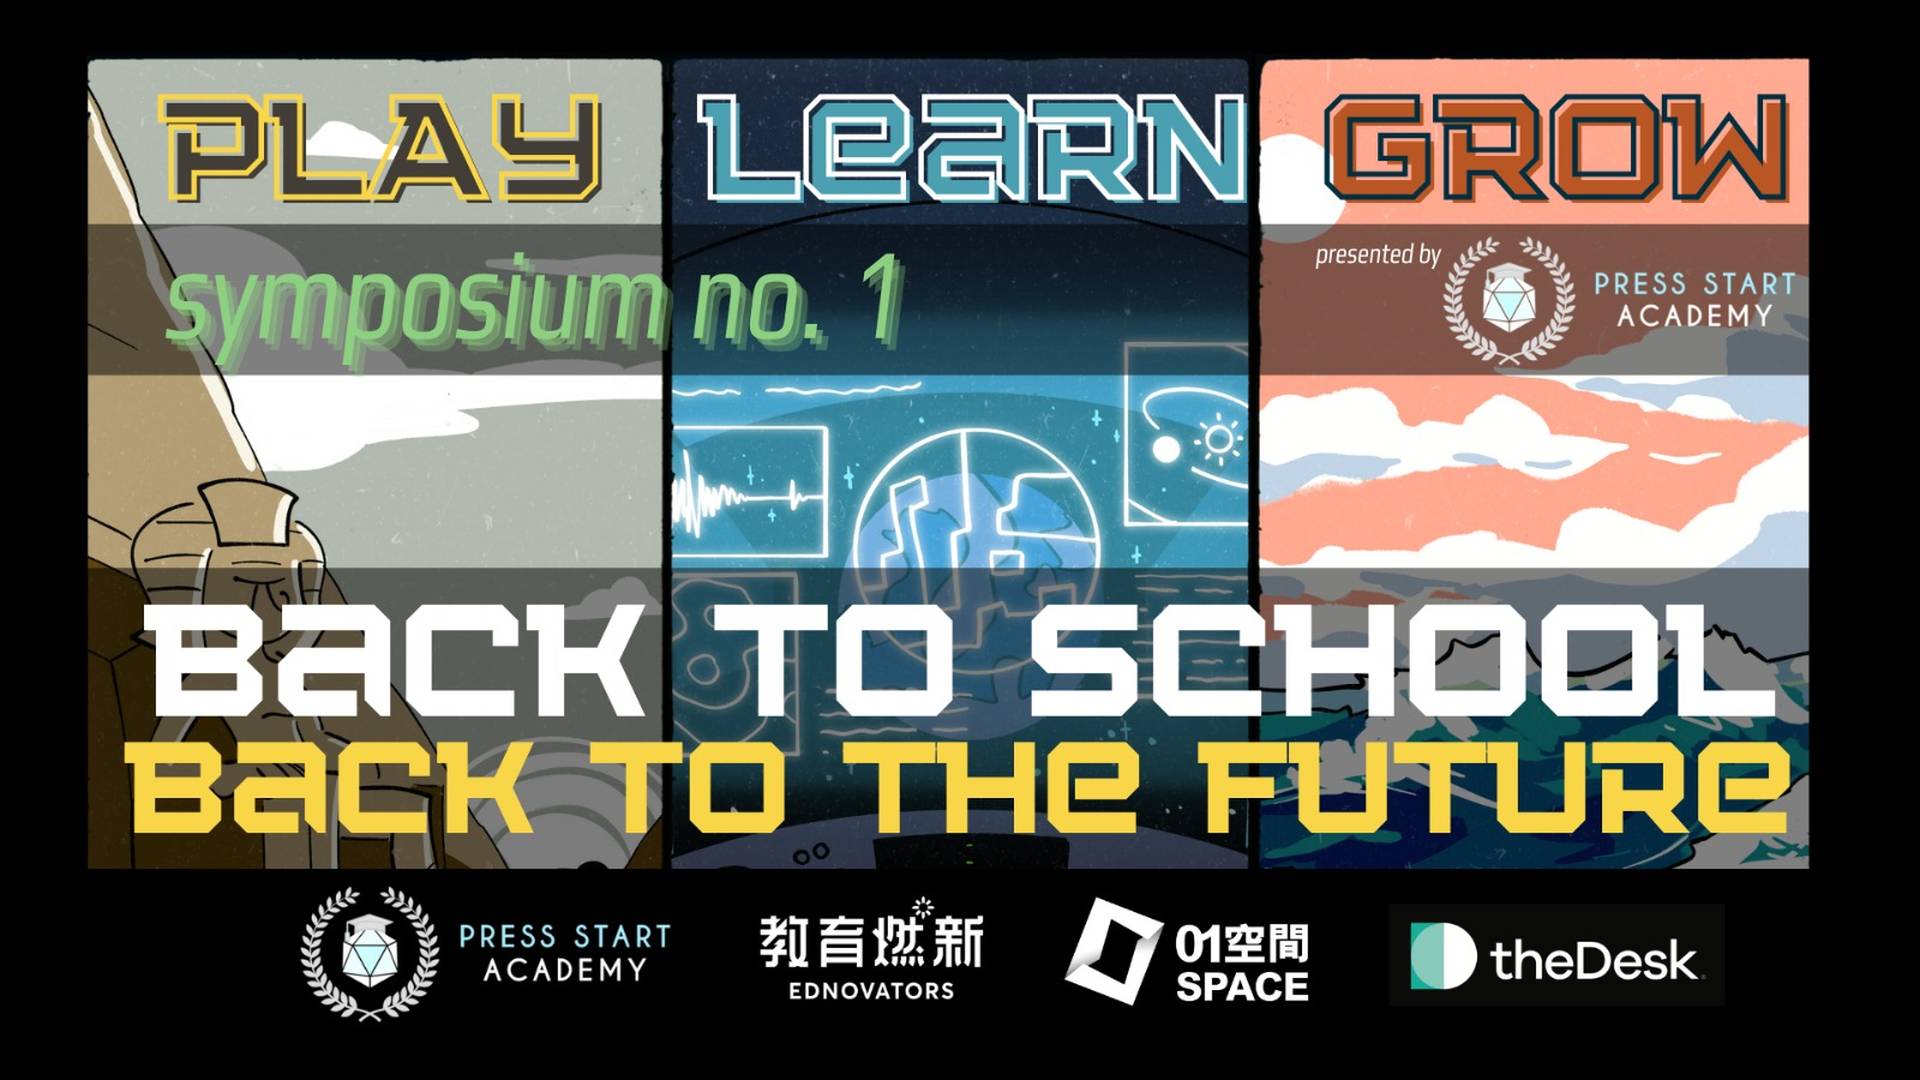 #PlayLearnGrow 研討會 #1：回到學校、回到未來